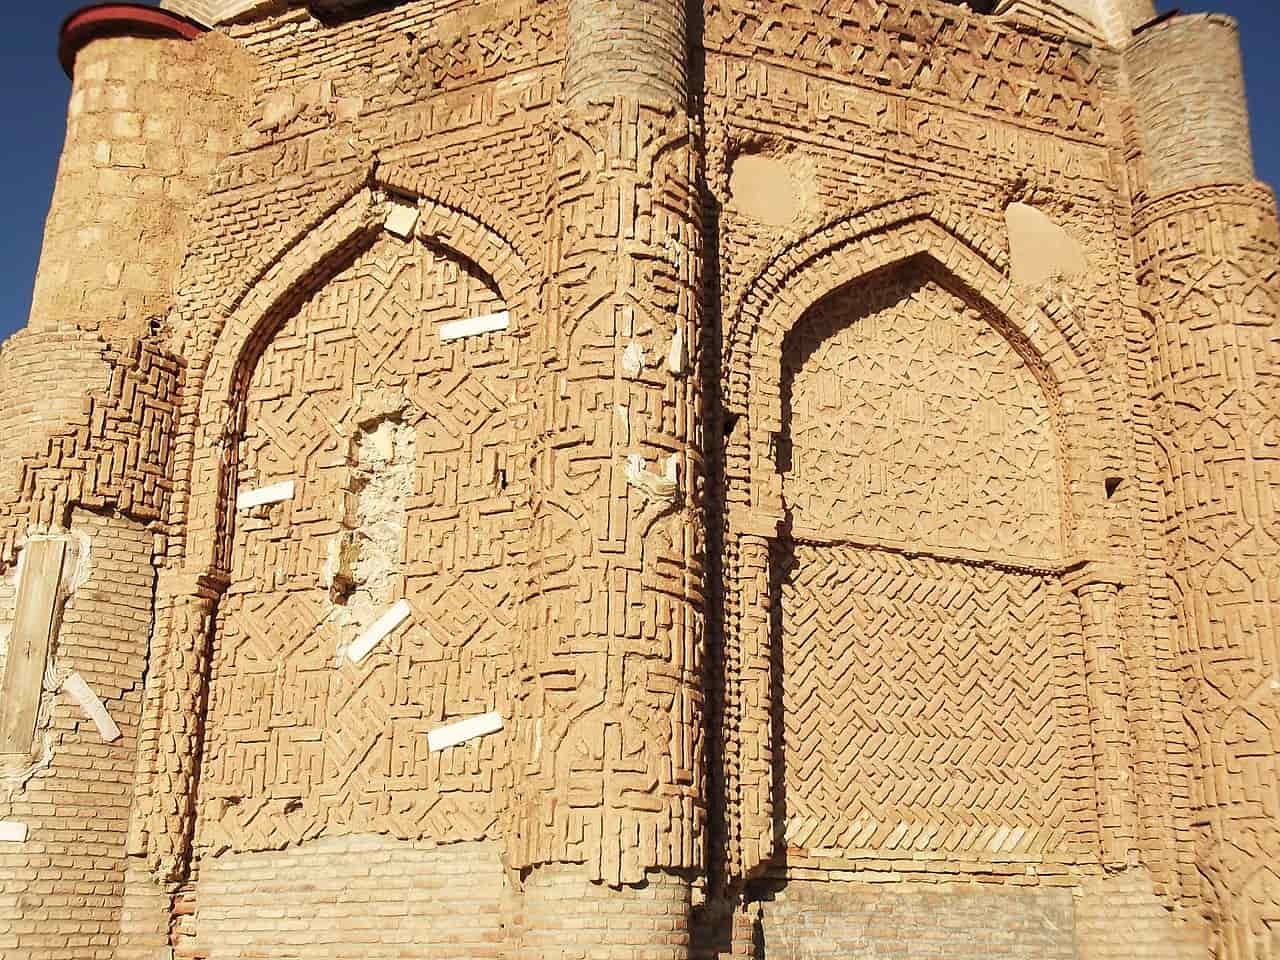 kharaghan tombs - Qazvin - Iran saeidshakouri.com saeid shakouri